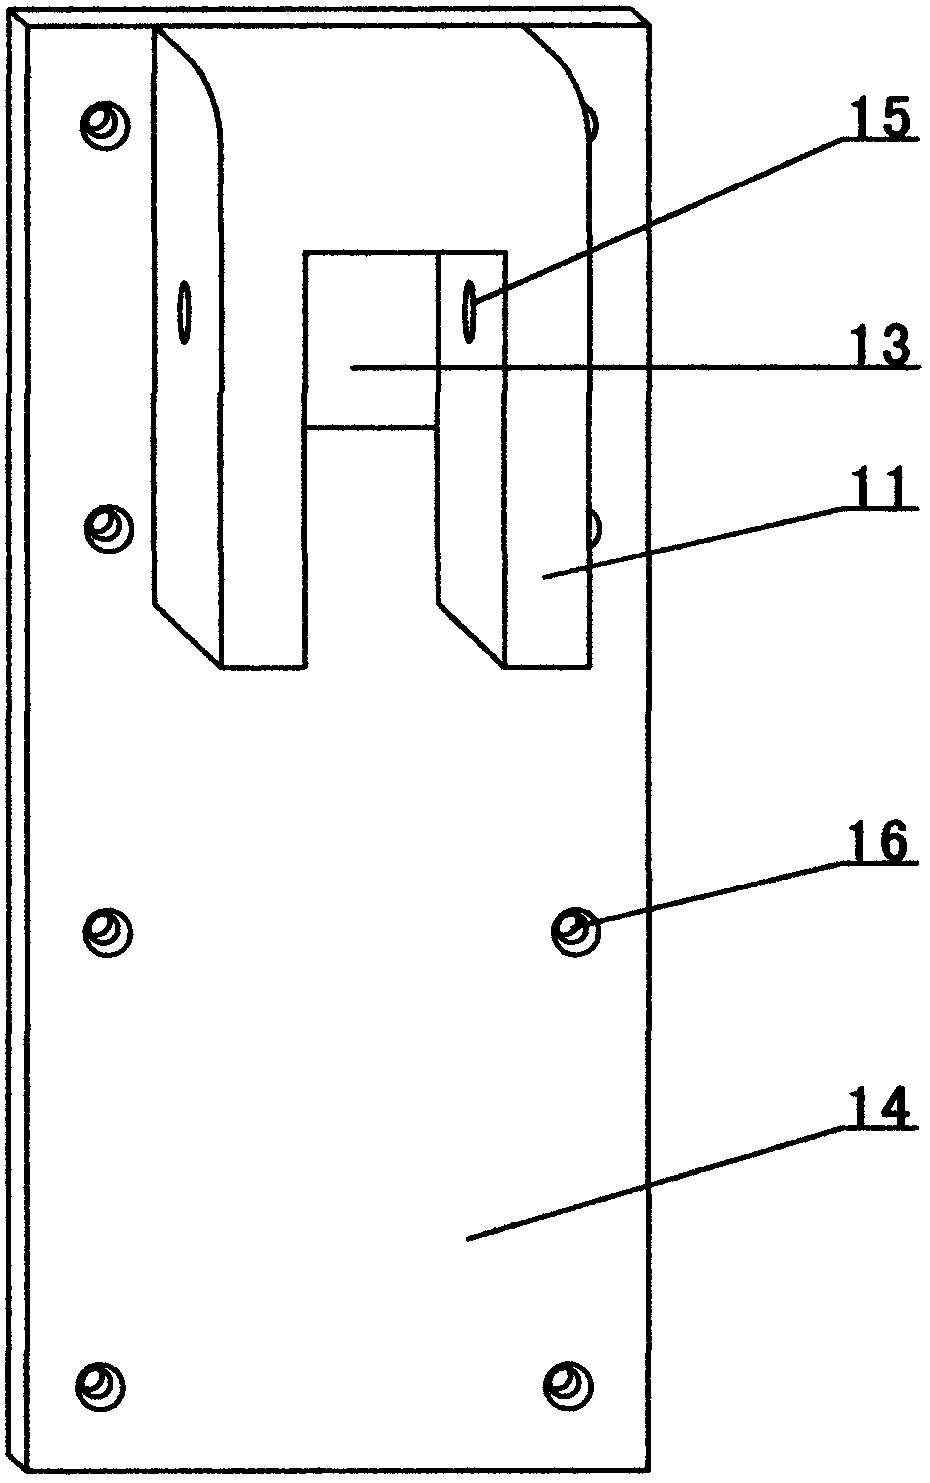 Magnetic attraction lever-type handle for self closing refrigerator door